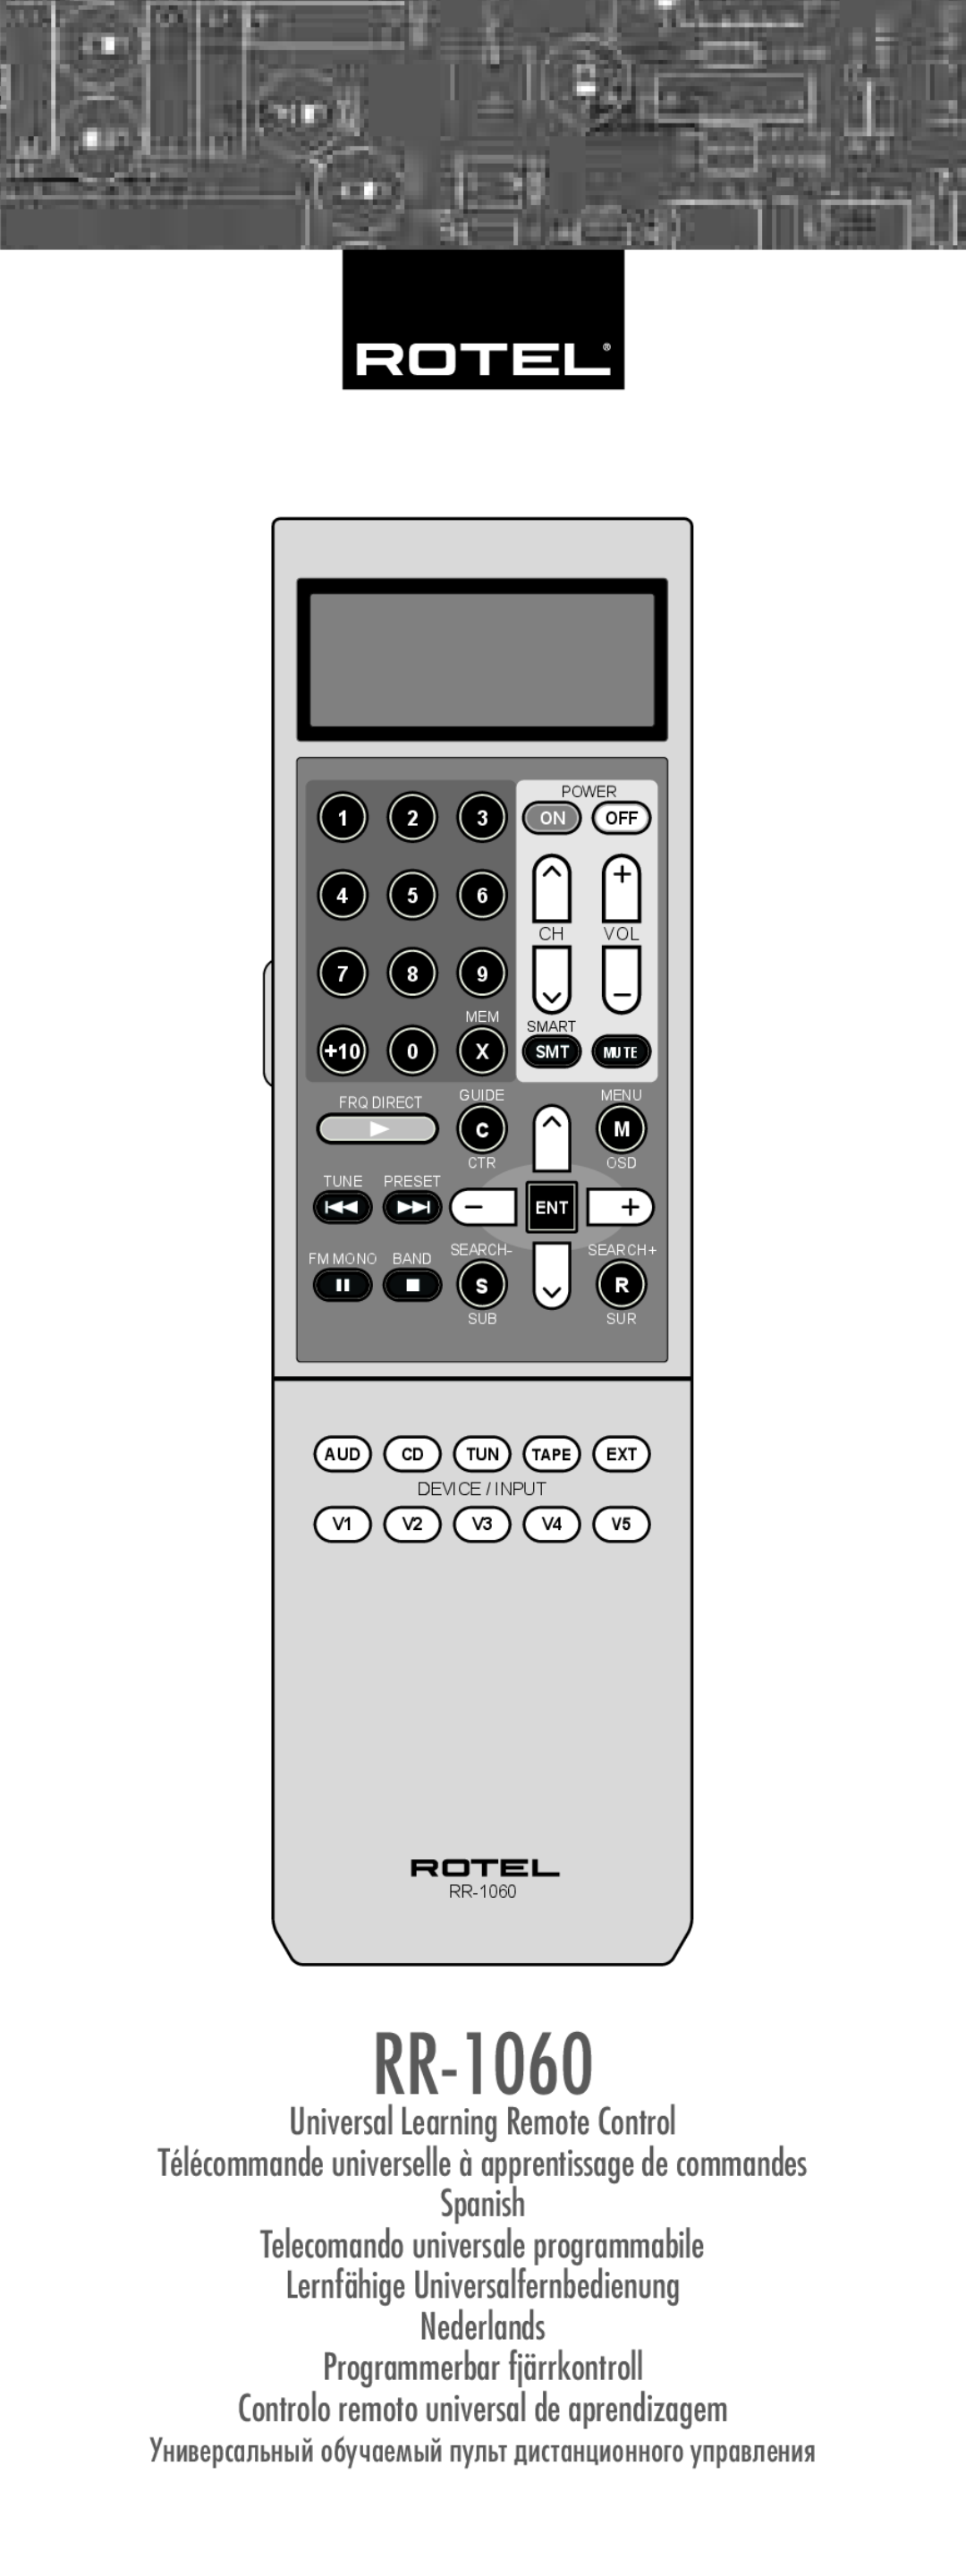 Rotel RR-1060 manual Universal Learning Remote Control, Spanish Telecomando universale programmabile, 1 2 3 ON OFF 4 5 